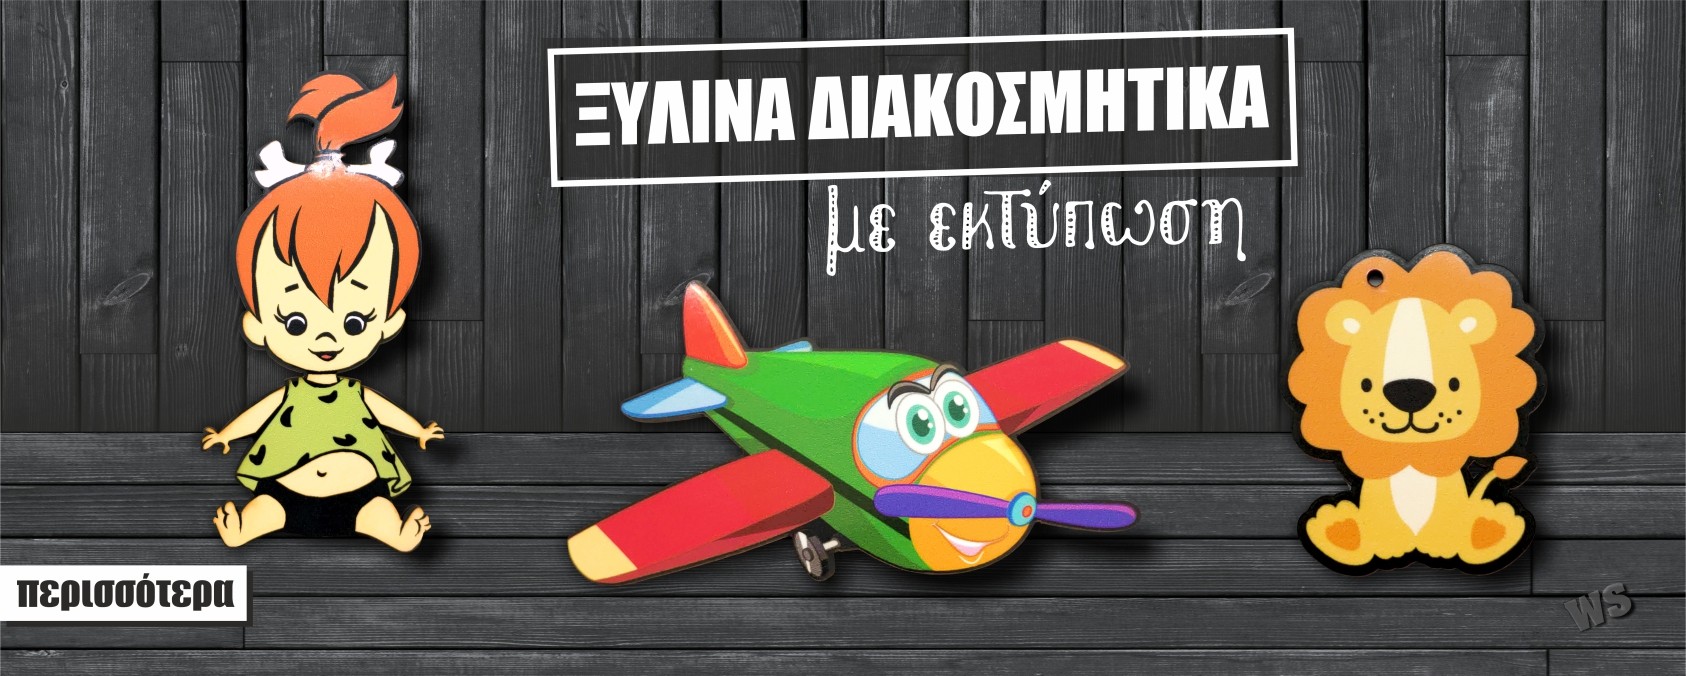 ksulina_diakosmhtika_sticker